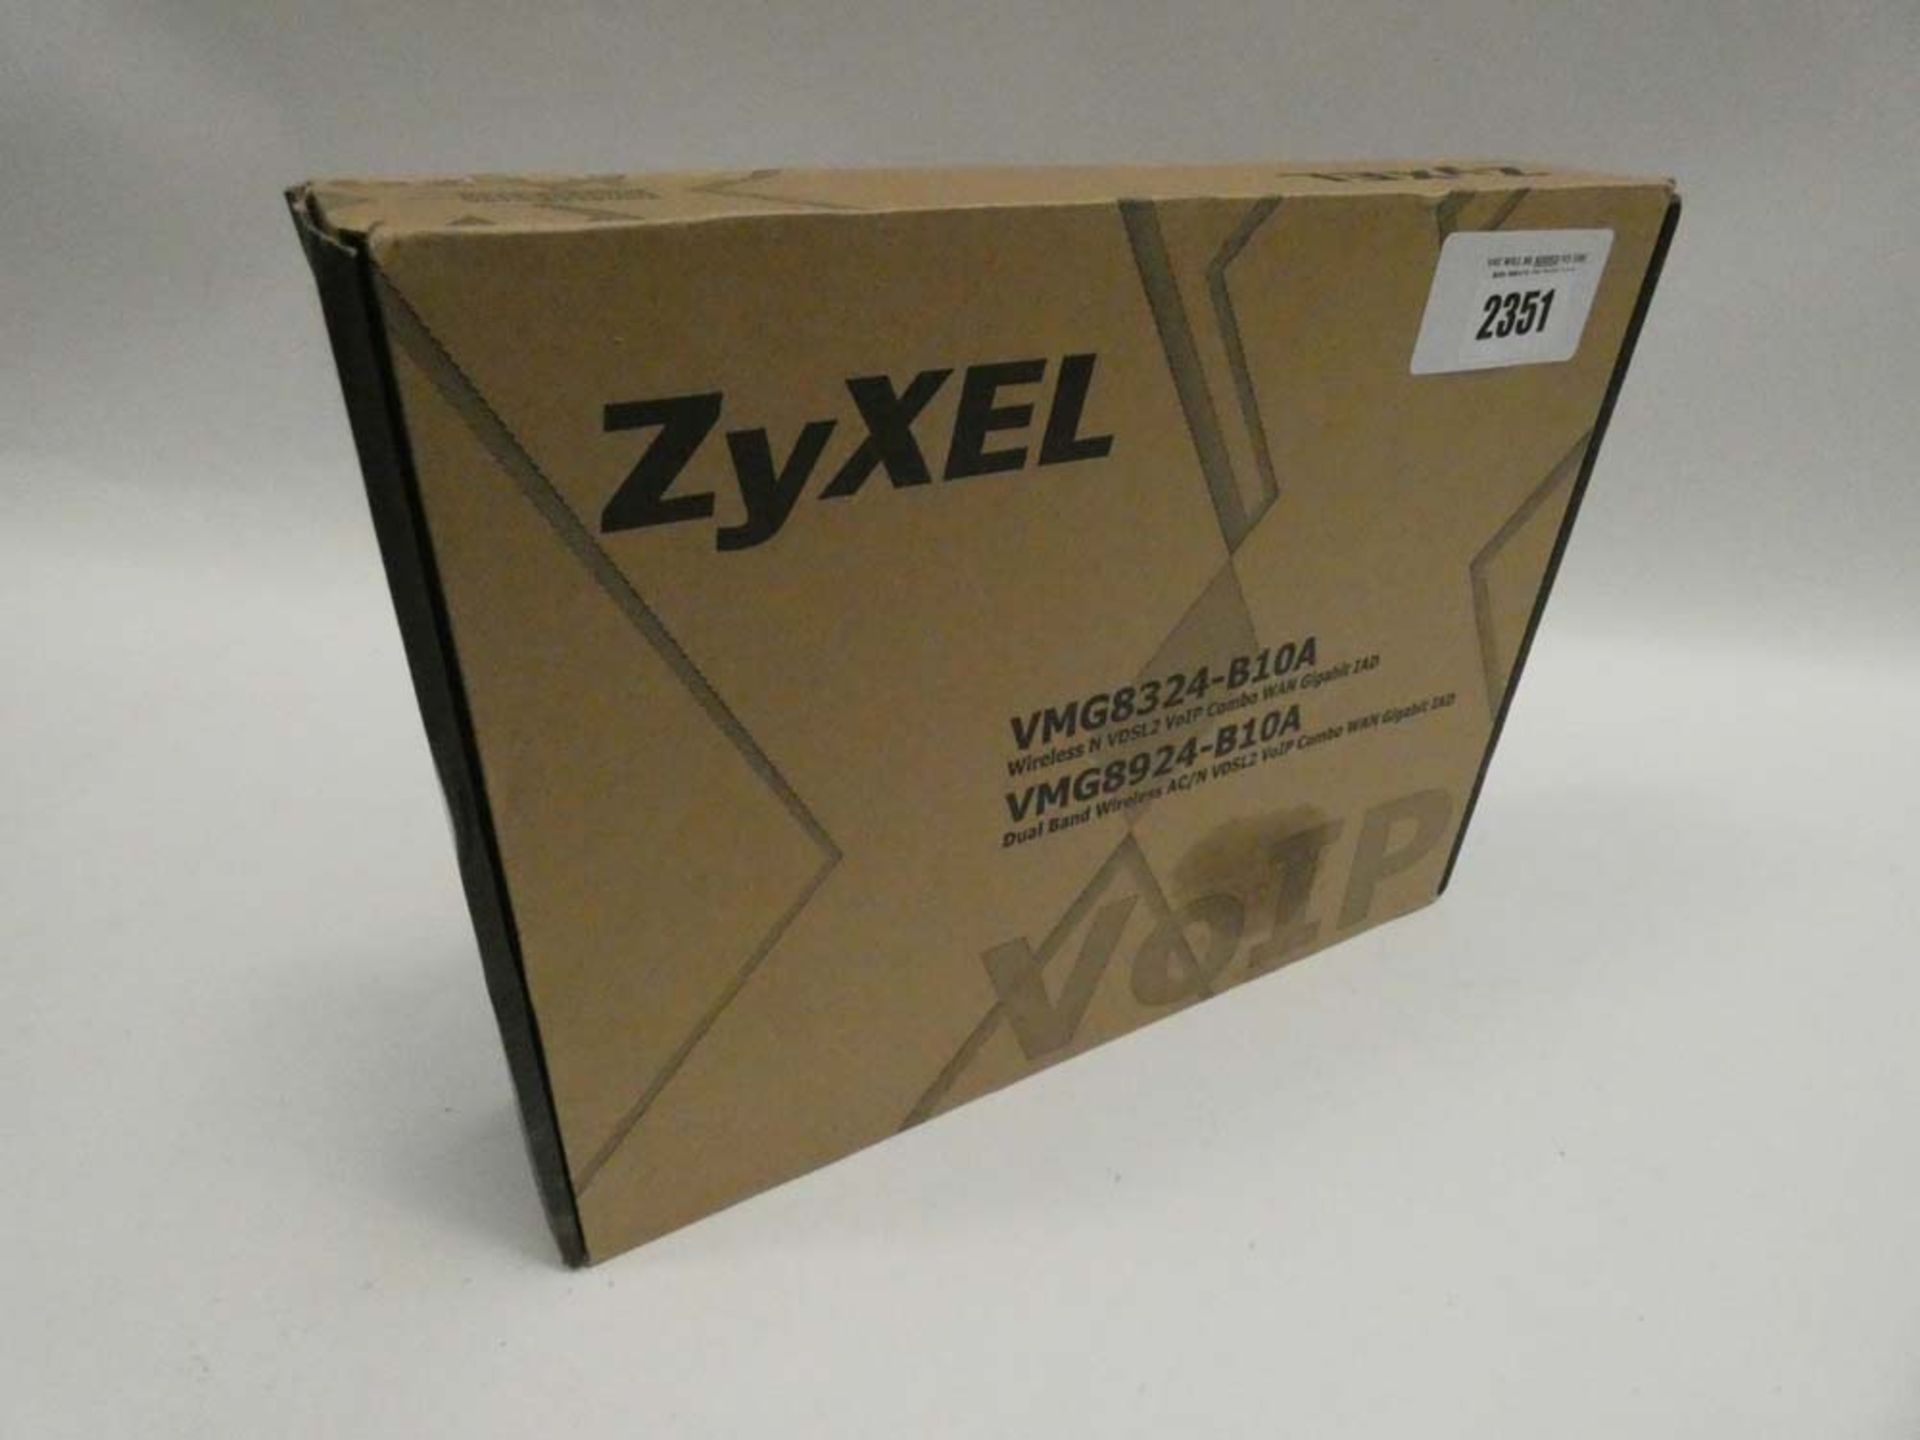 ZyXEL VMG8924-B10A router